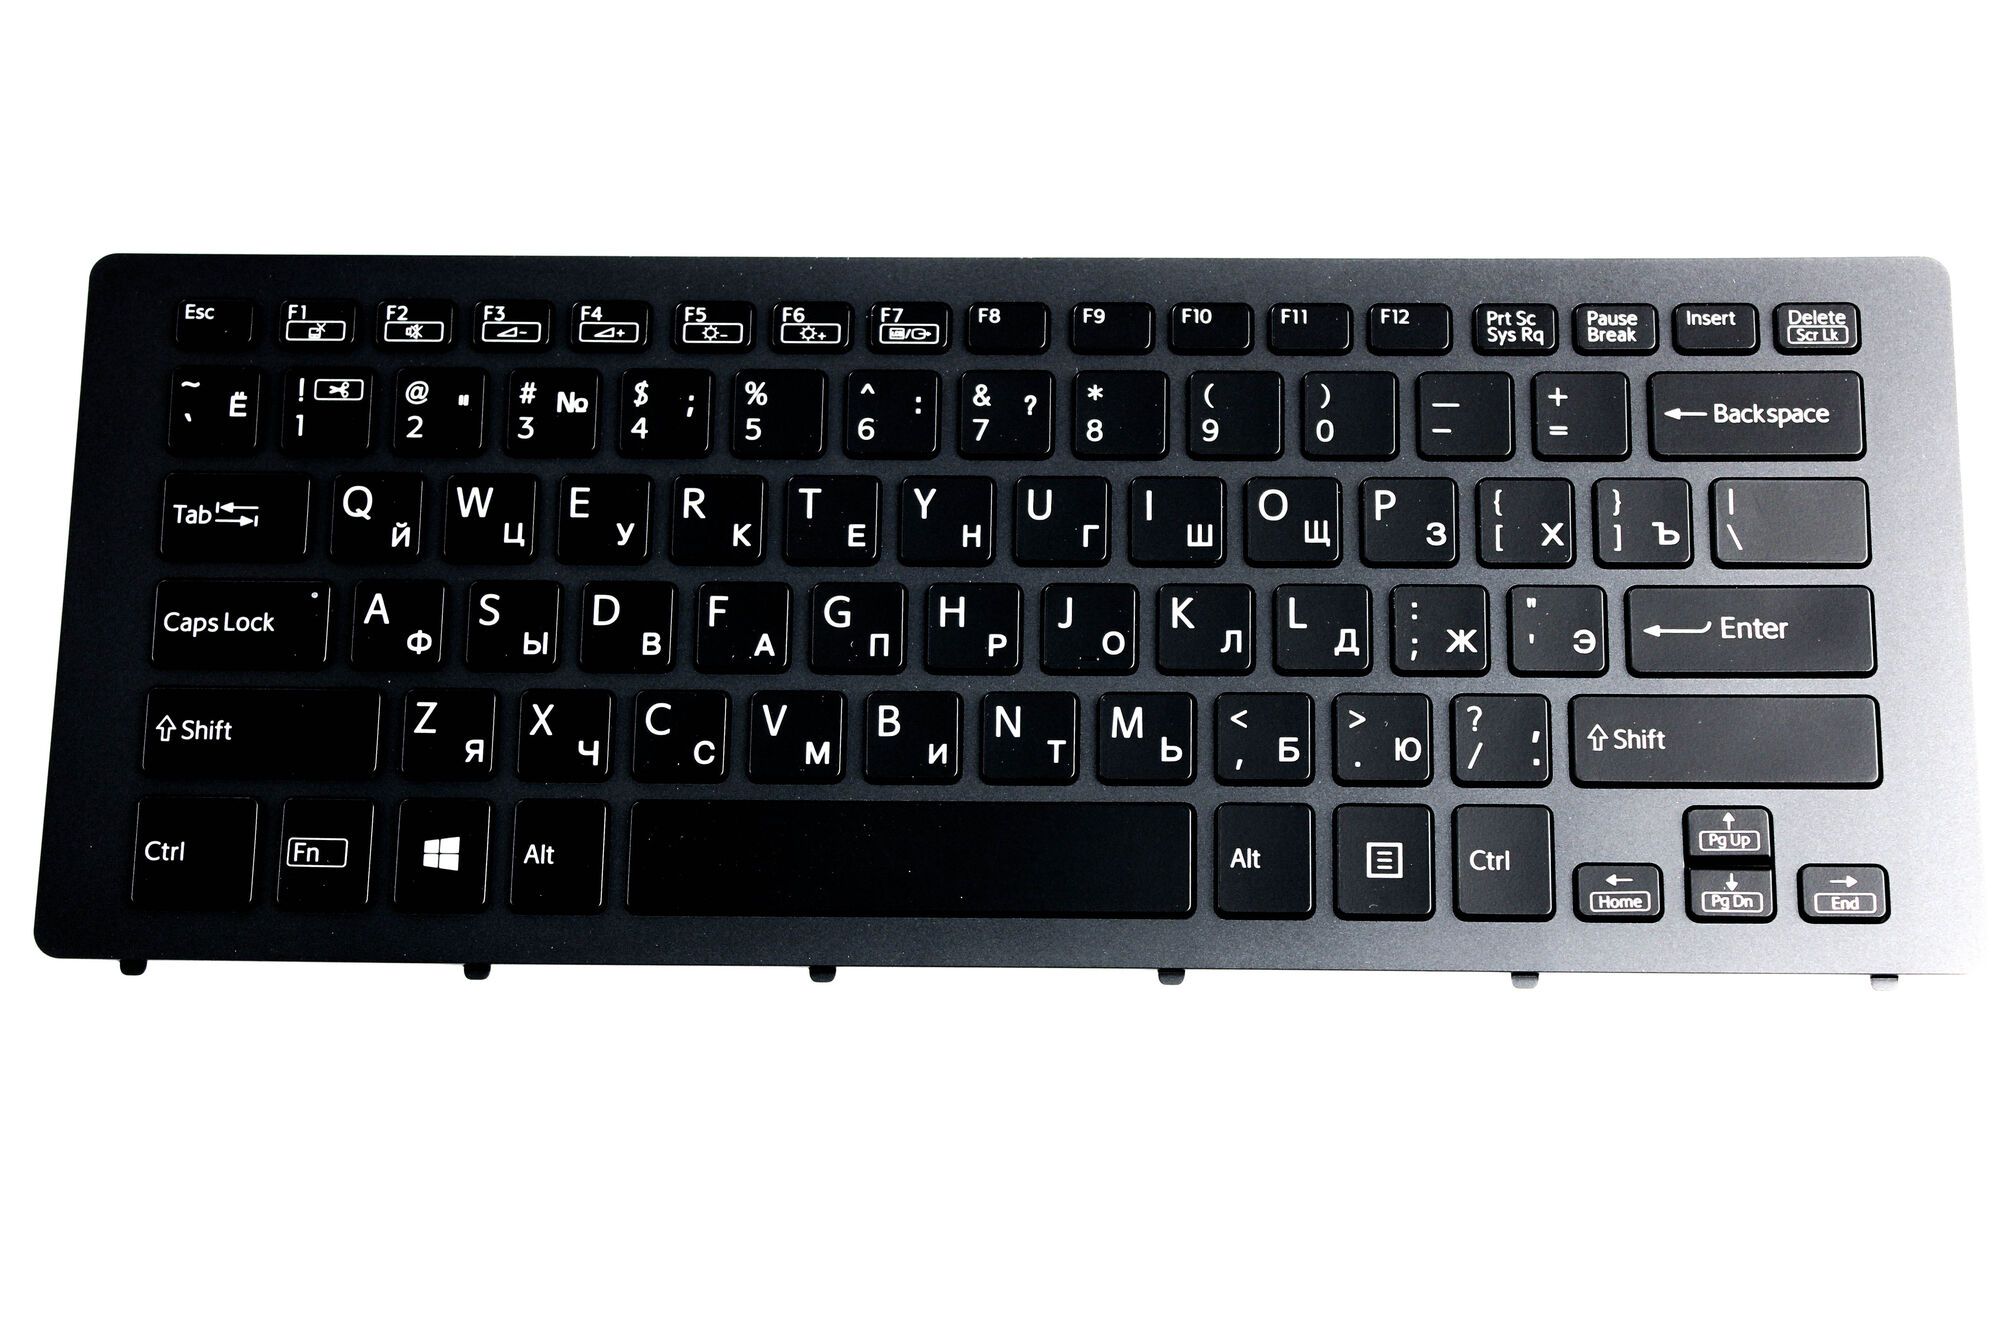 Клавиатура для ноутбука Sony SVF15N черная p/n: 149264921US, AEFI3U000103A, 9Z.NABBQ.701